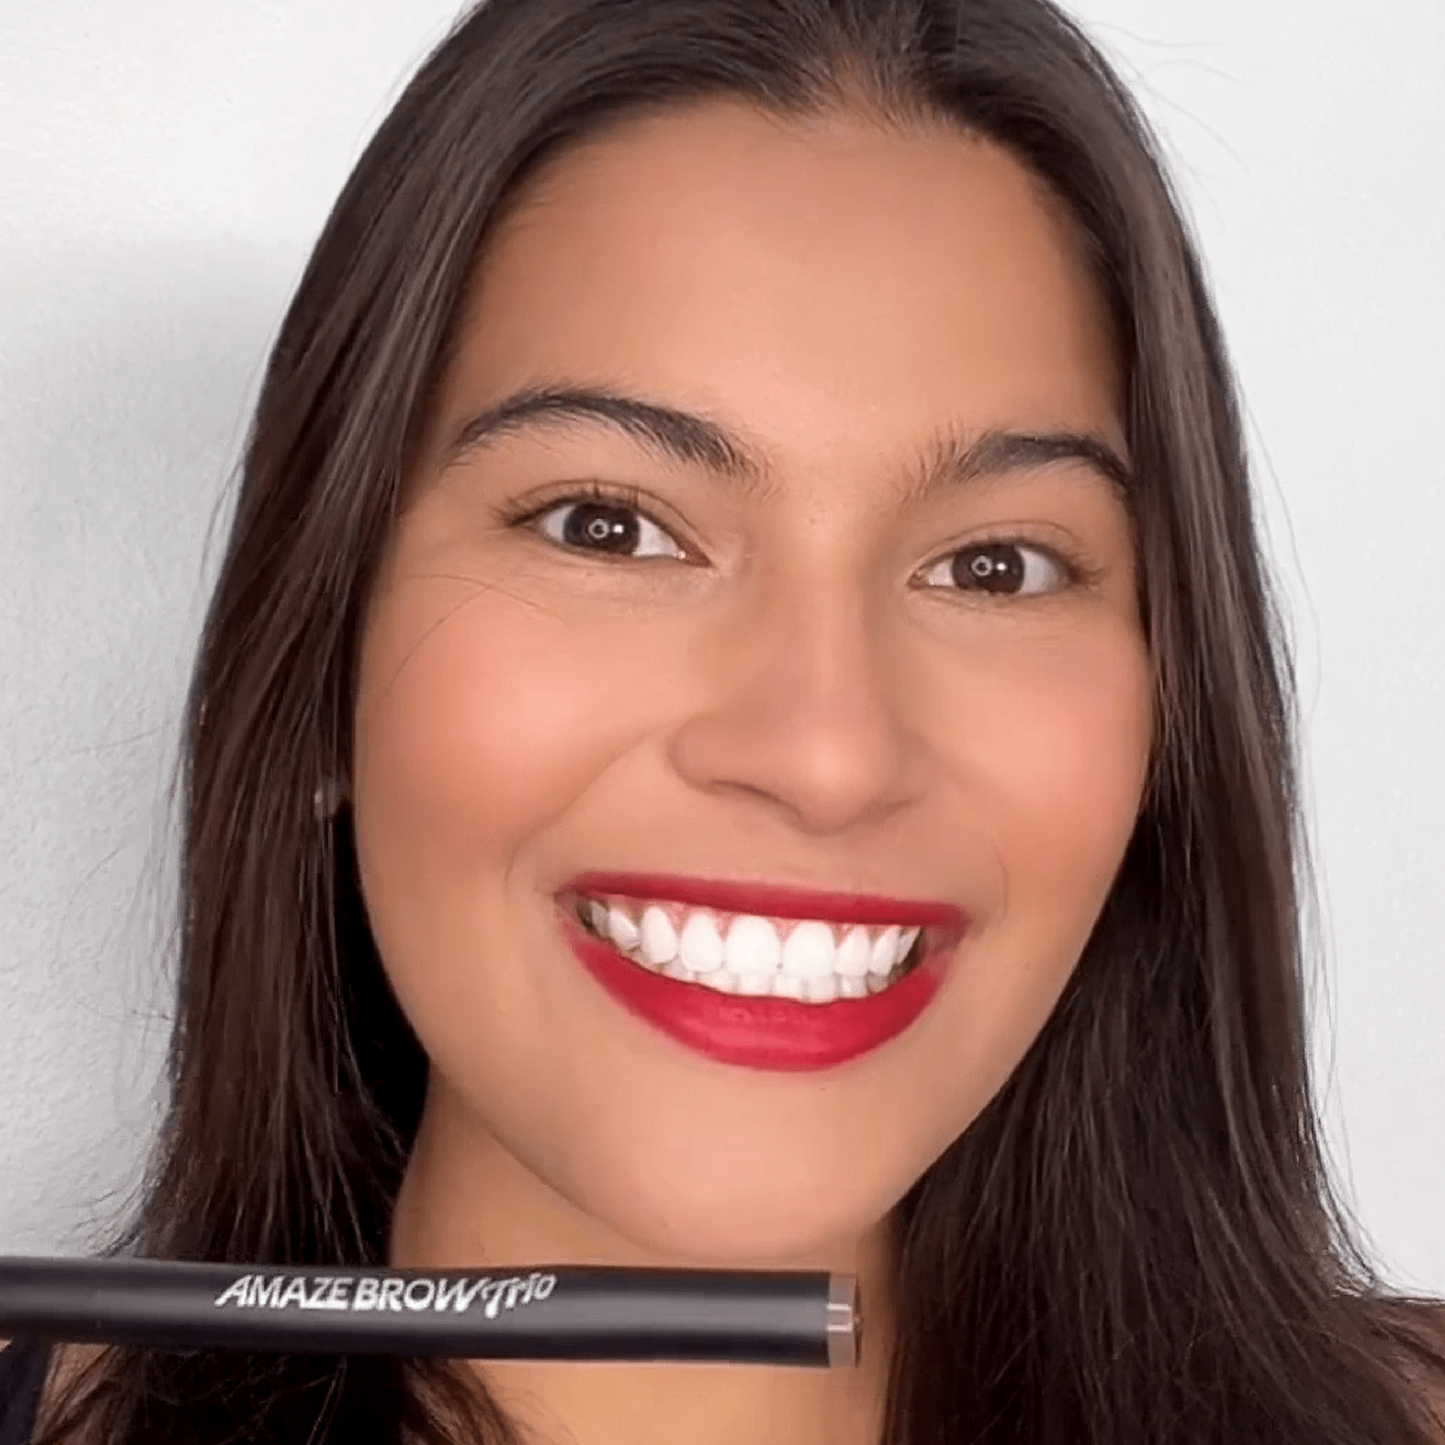 Smiling woman holding Amaze Brow growth serum 3-tip eyebrow pen